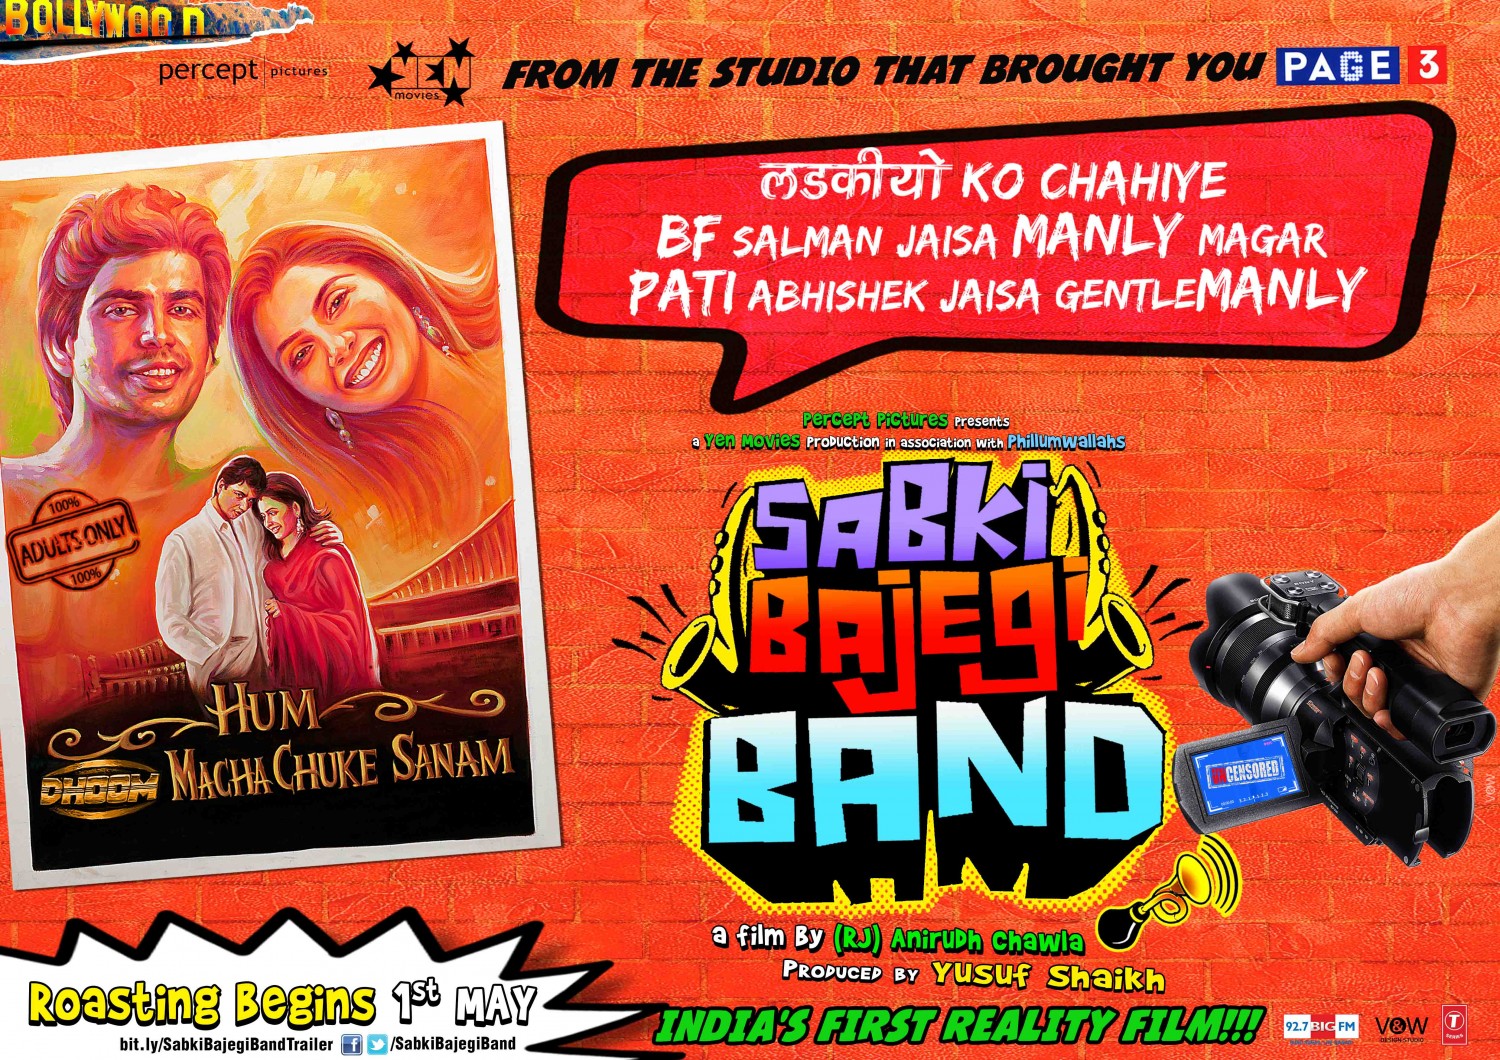 Extra Large Movie Poster Image for Sabki Bajegi Band (#6 of 24)